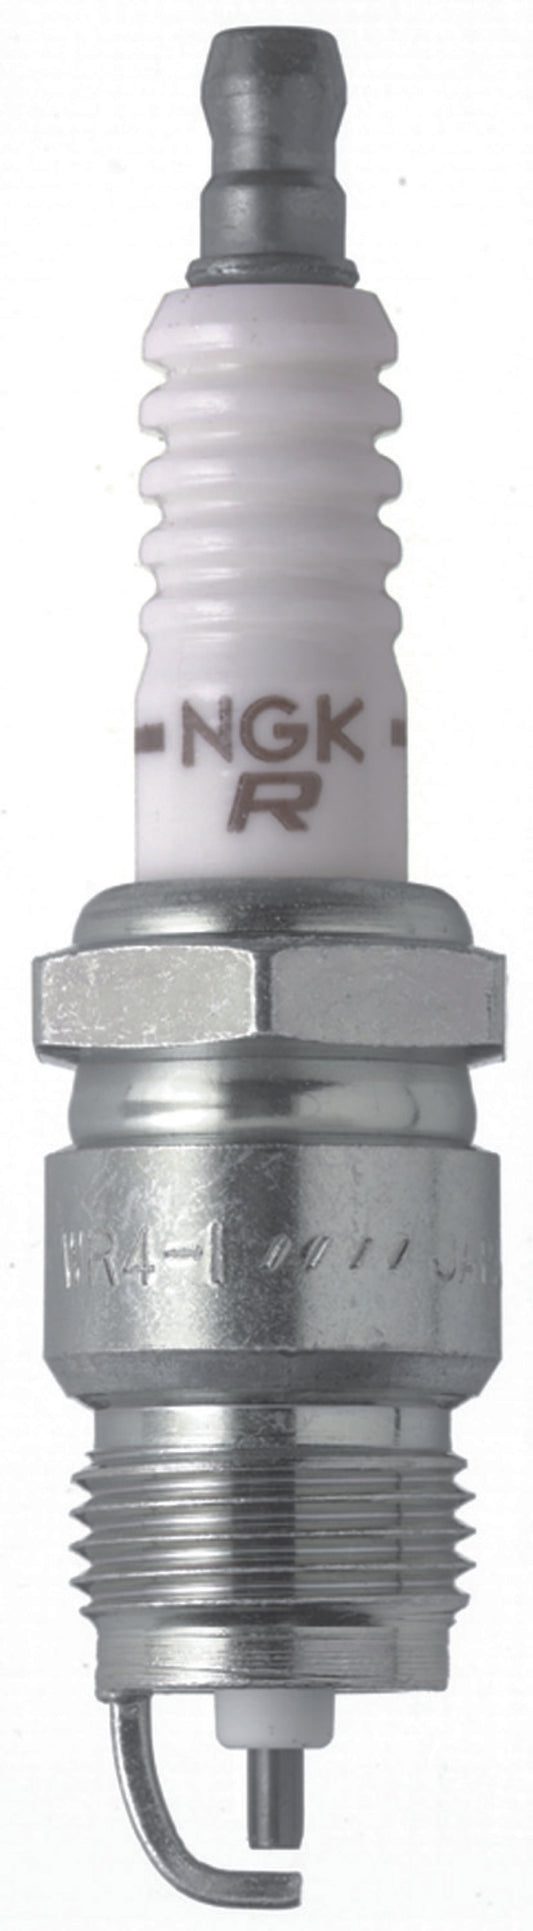 NGK V-Power Spark Plug Box of 4 (WR4-1)